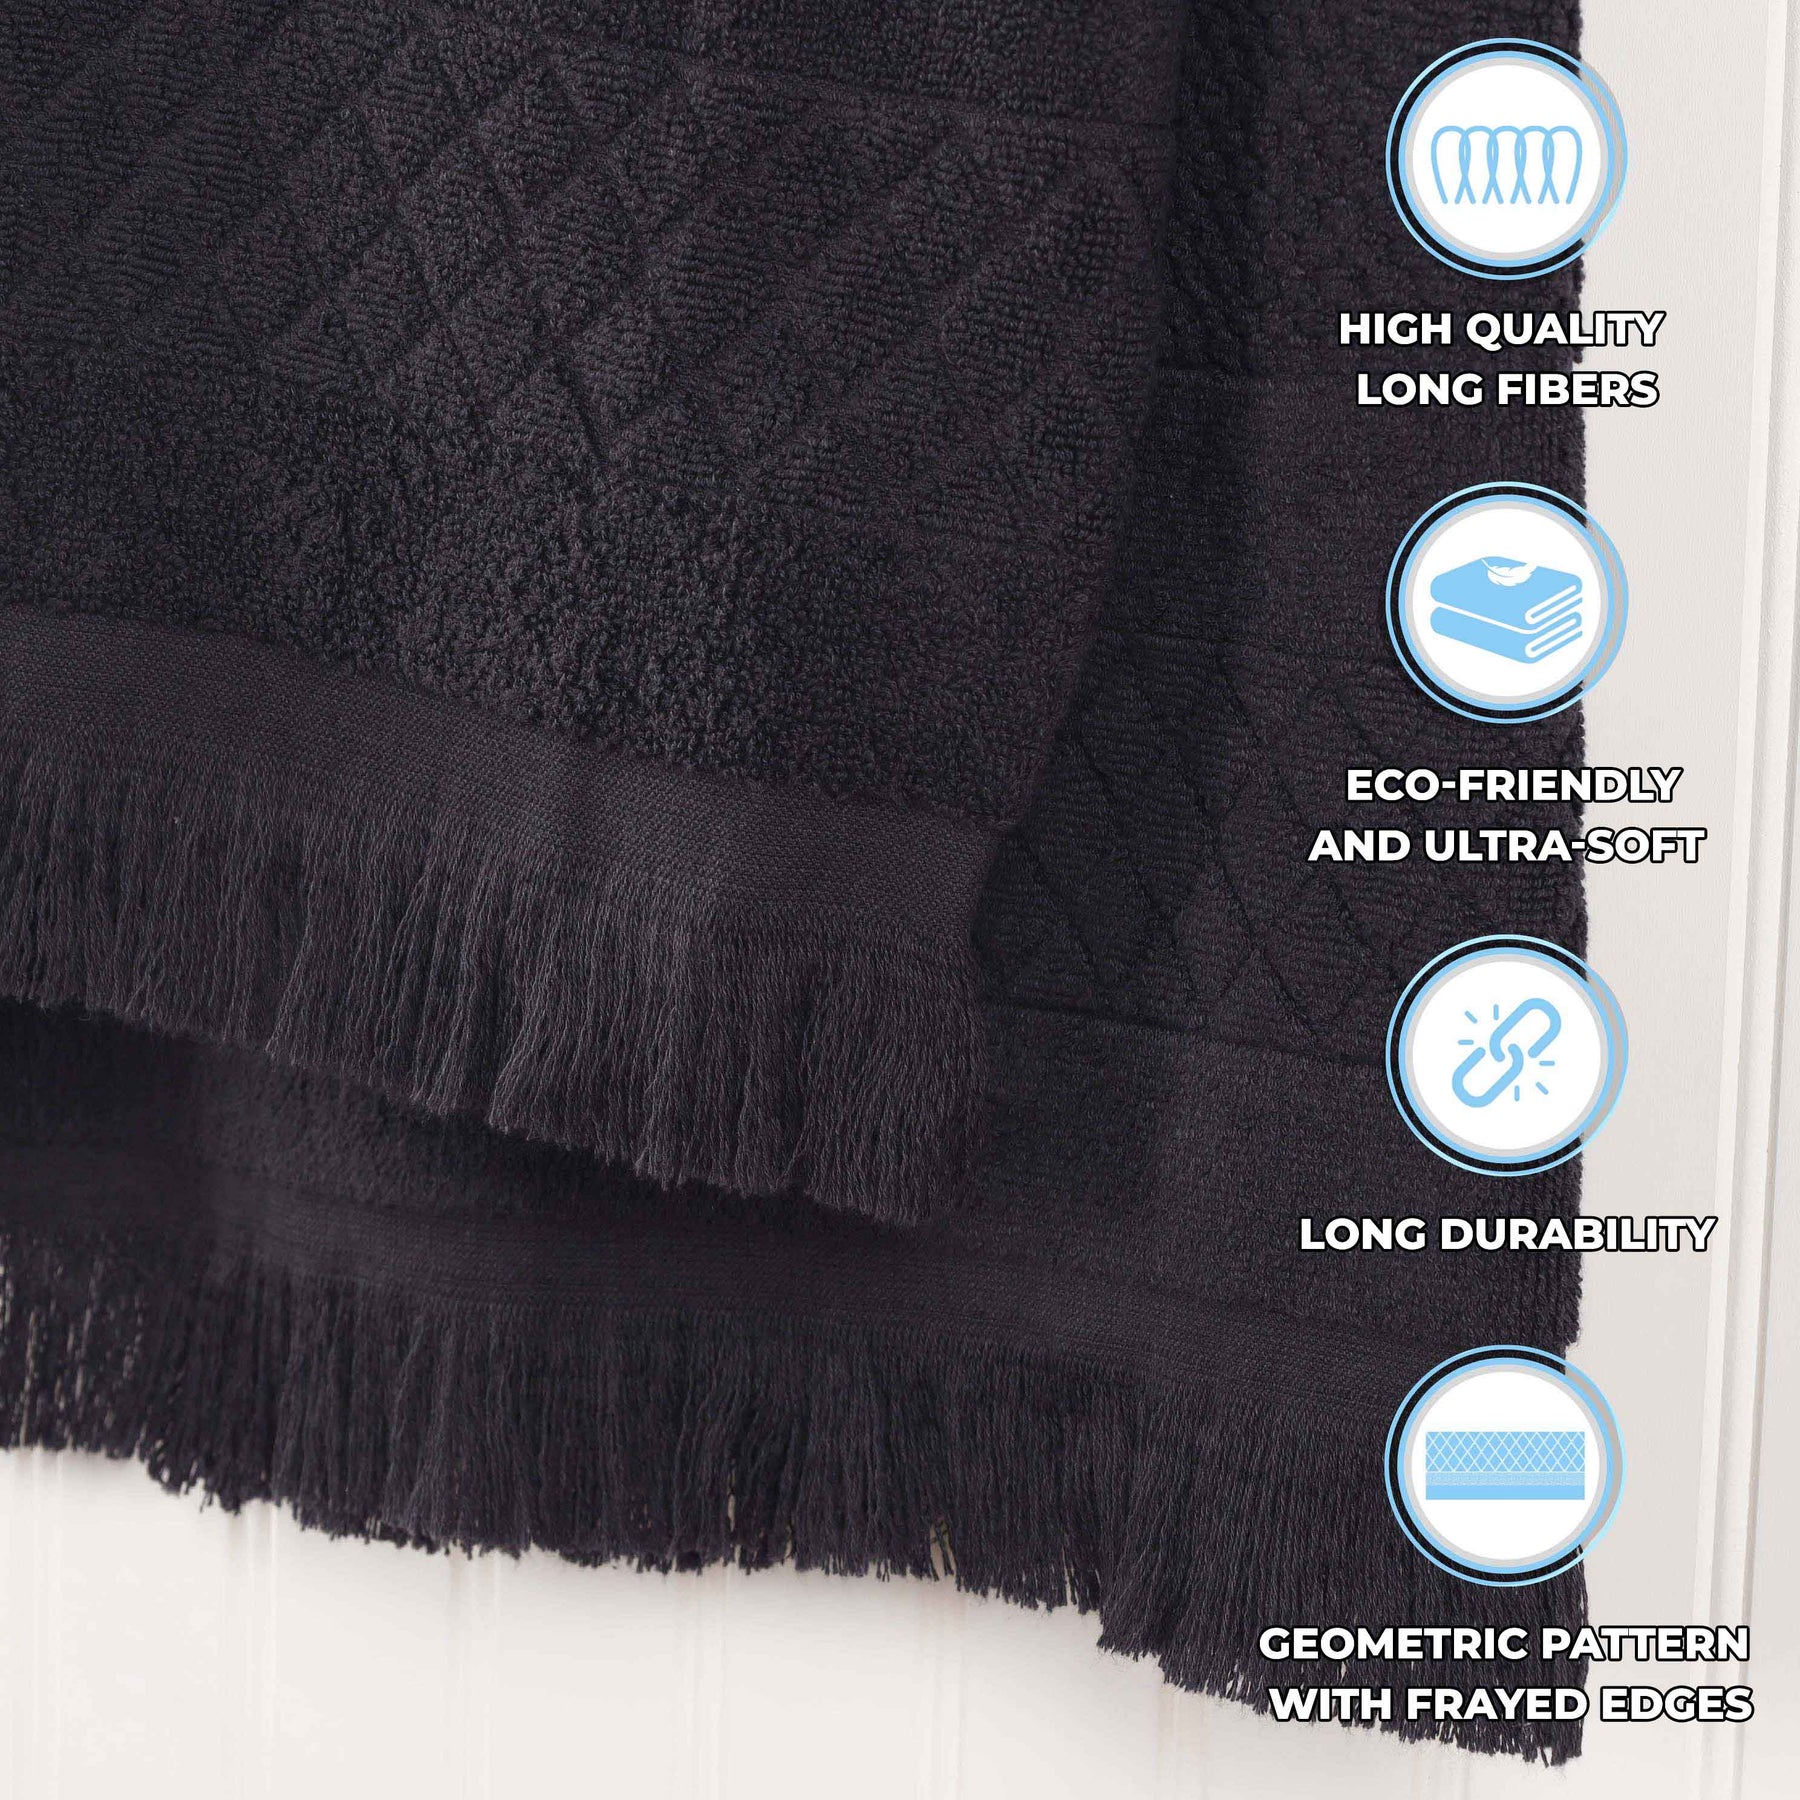 Rolla Cotton Geometric Jacquard Plush Absorbent Hand Towel - Black